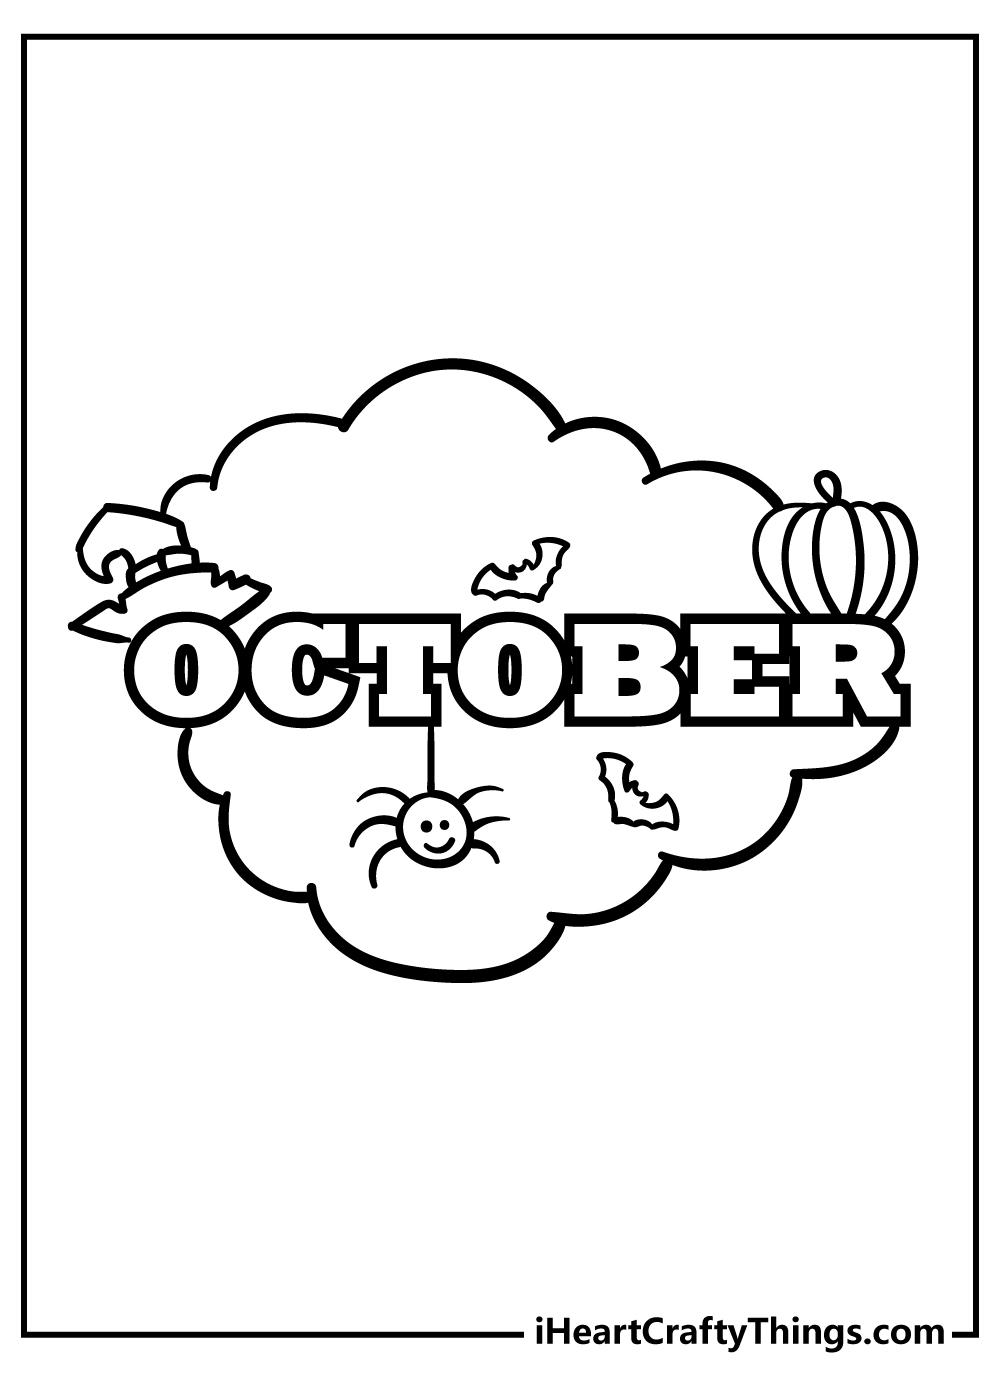 October Coloring Sheet for children free download